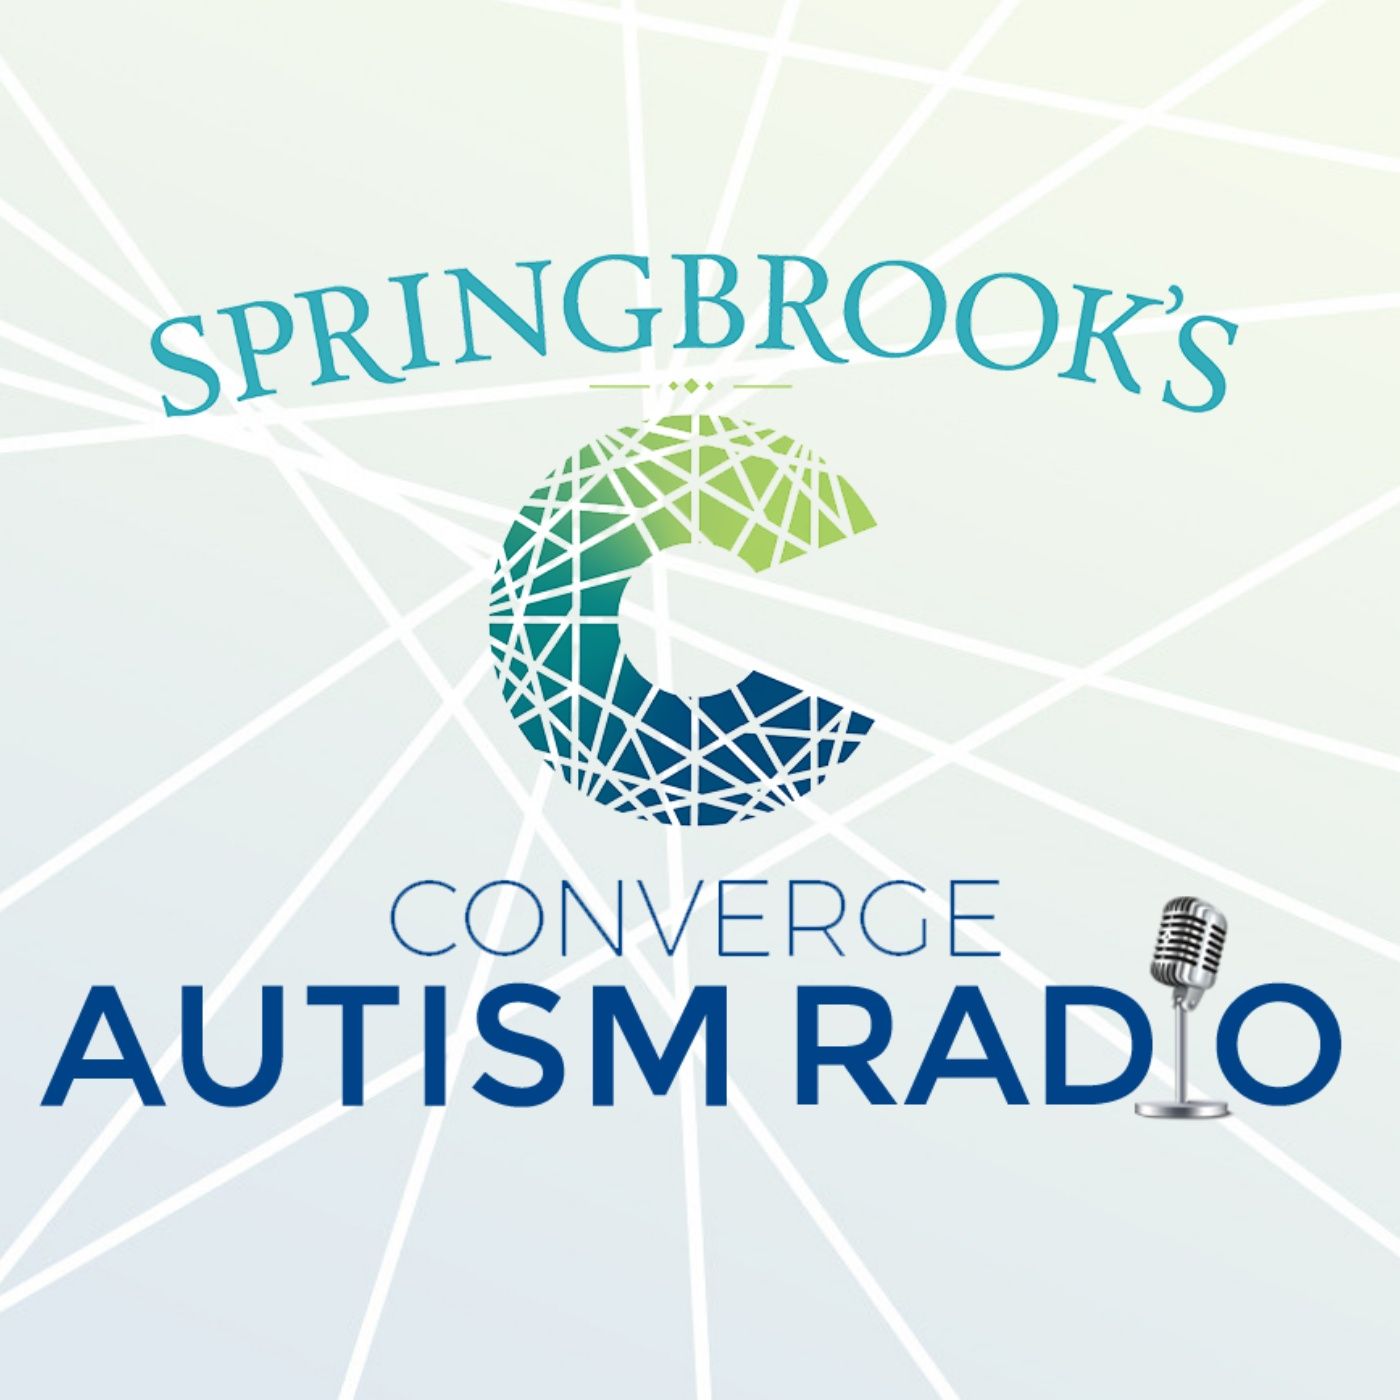 Springbrook’s Converge Autism Radio